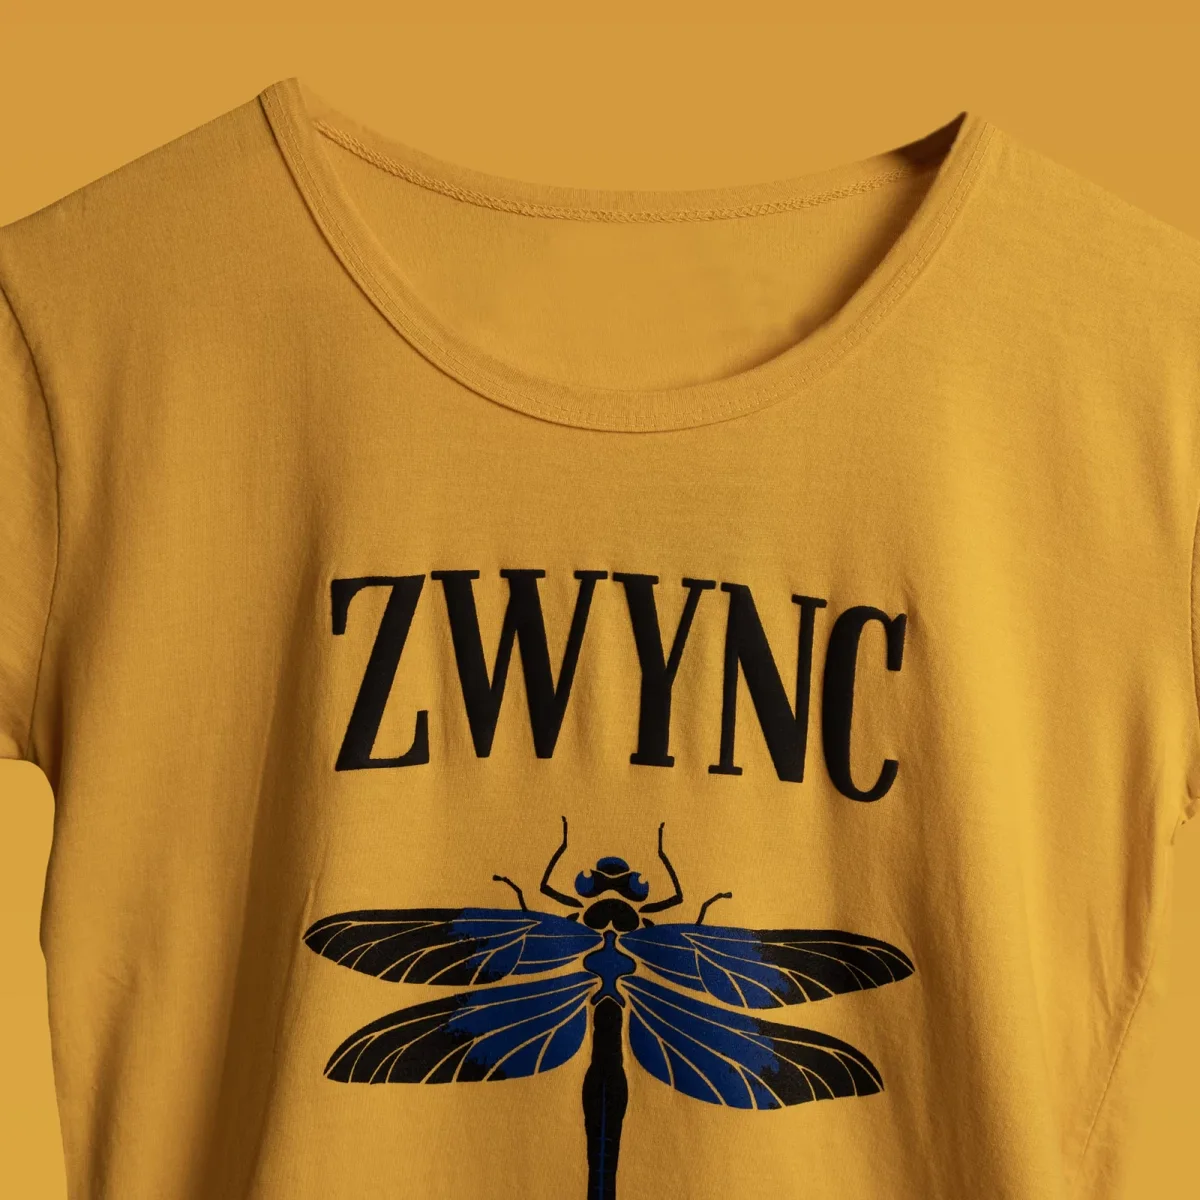 zwync Women’s Spectra Yellow Dragonfly T-shirt front design print